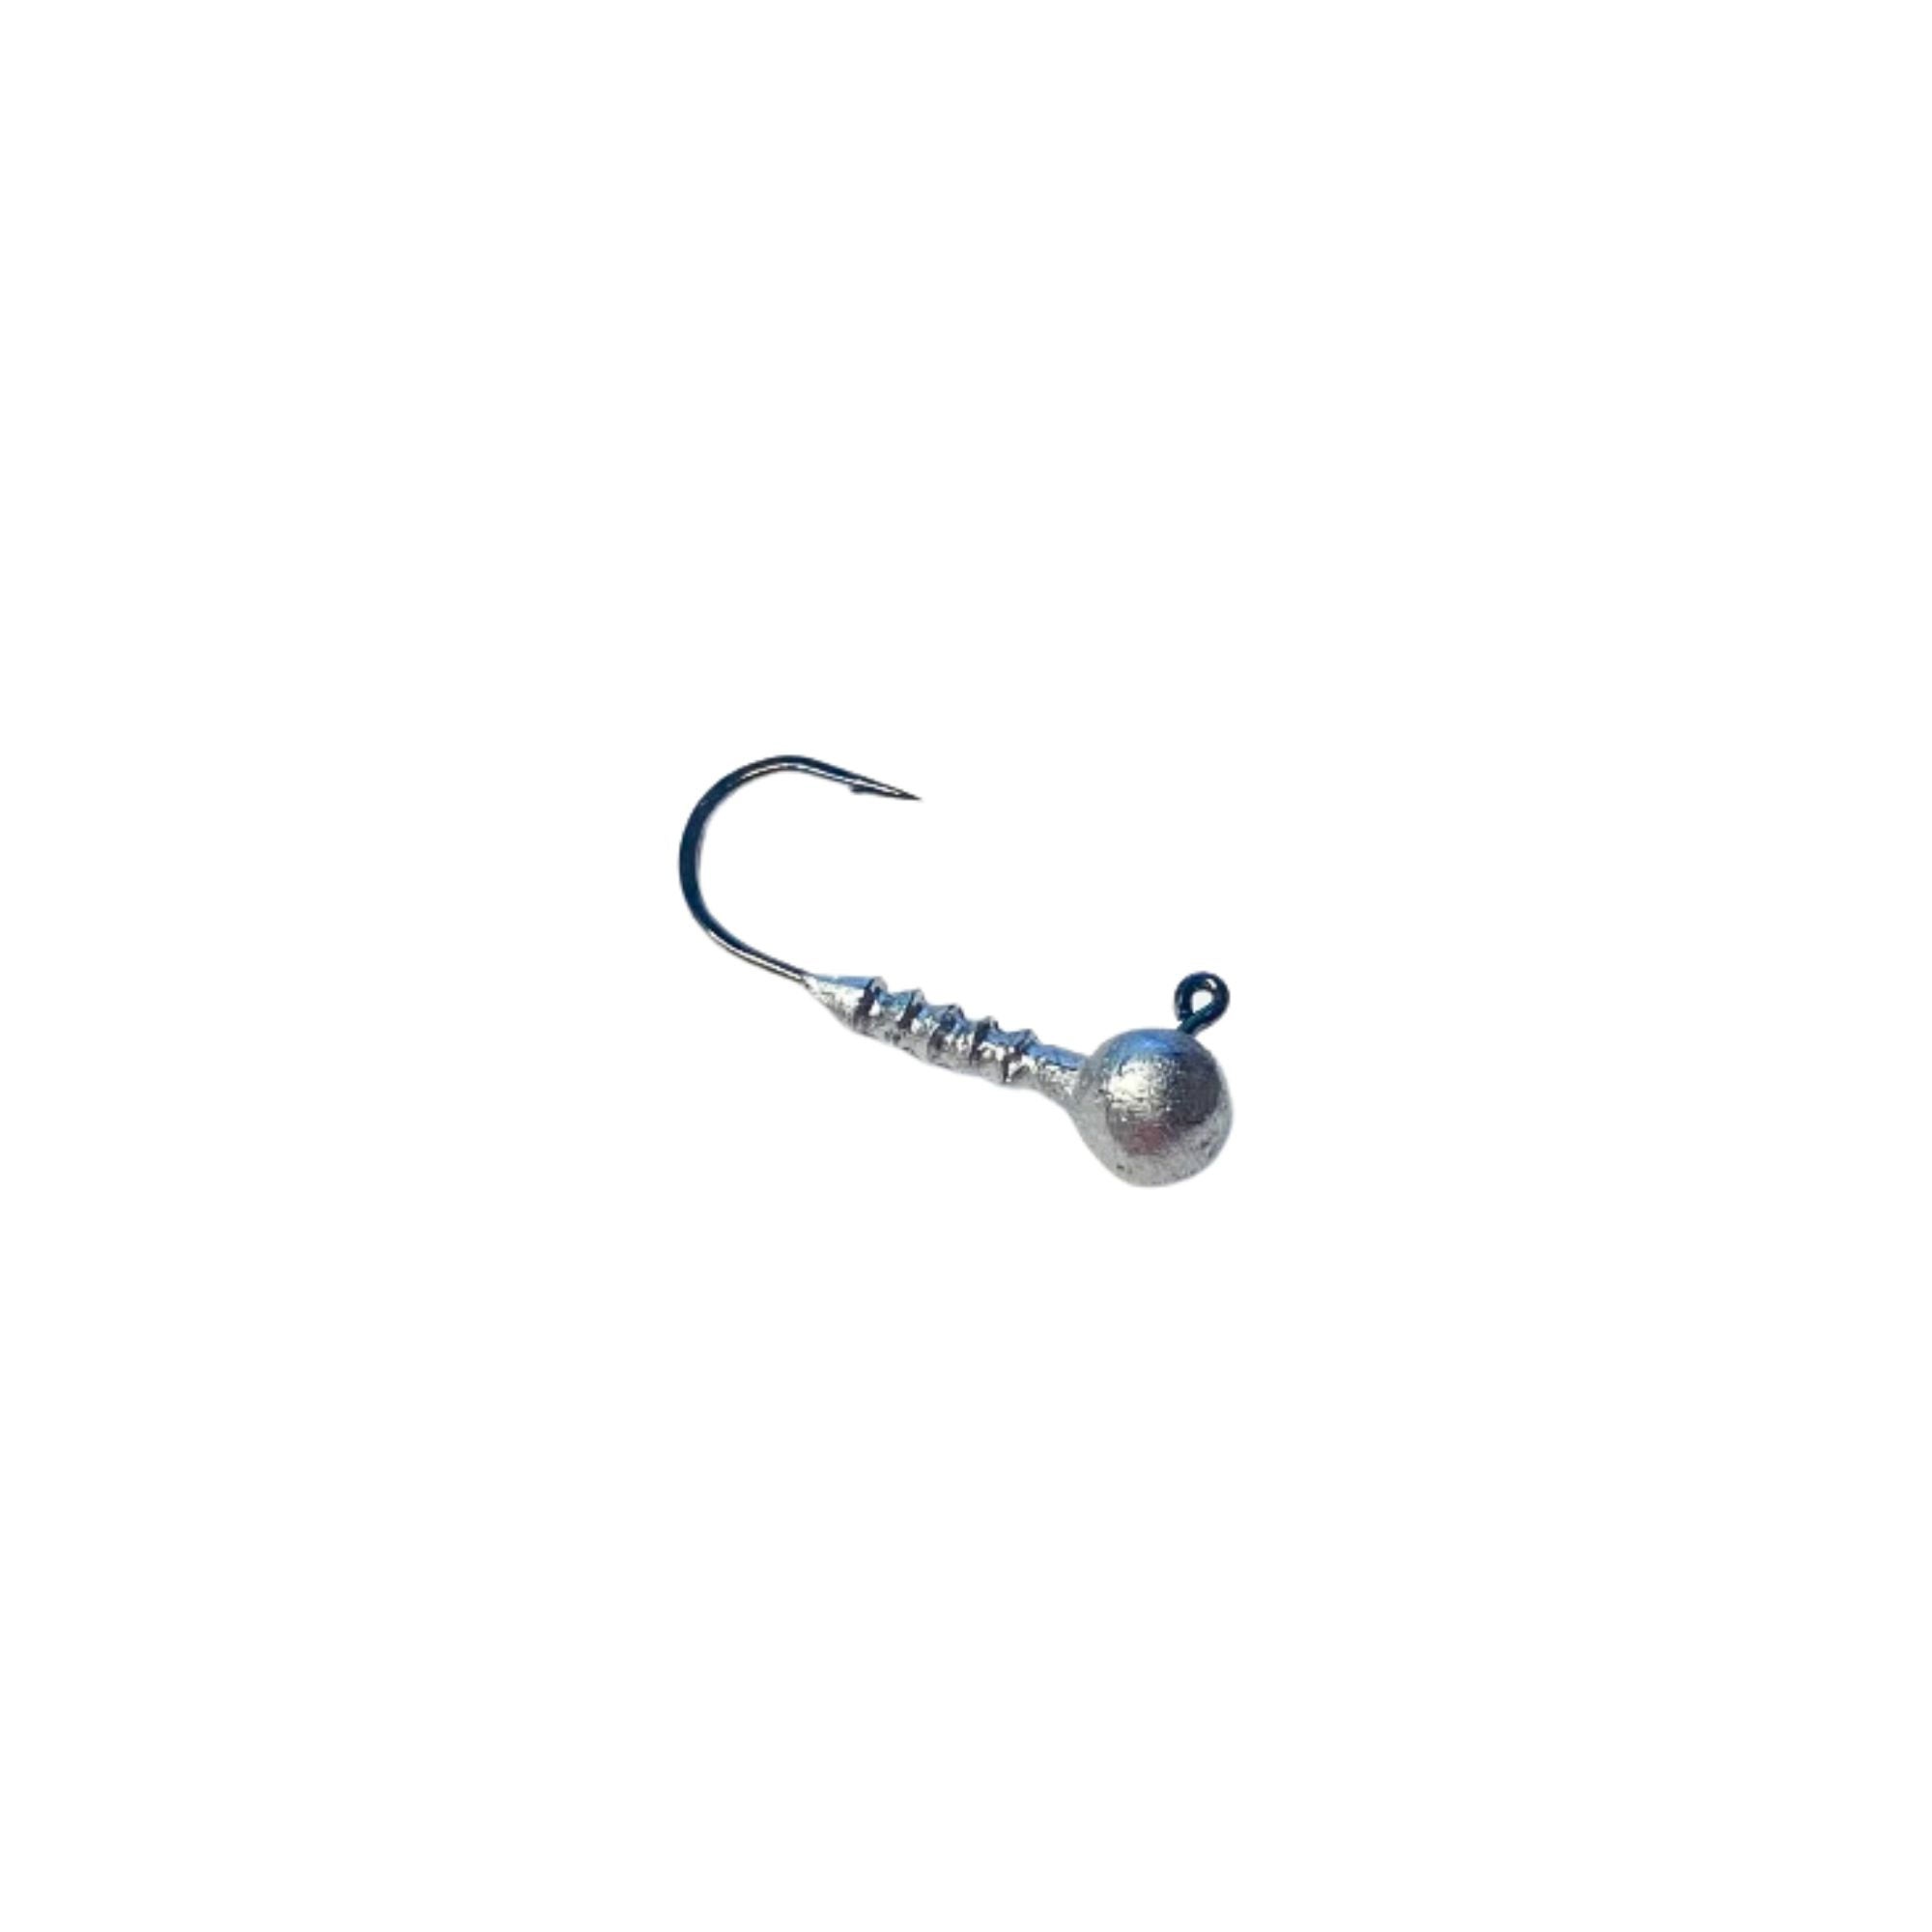 Micro Deathgrip Jighead, Fishing Hooks, Tackle, Store